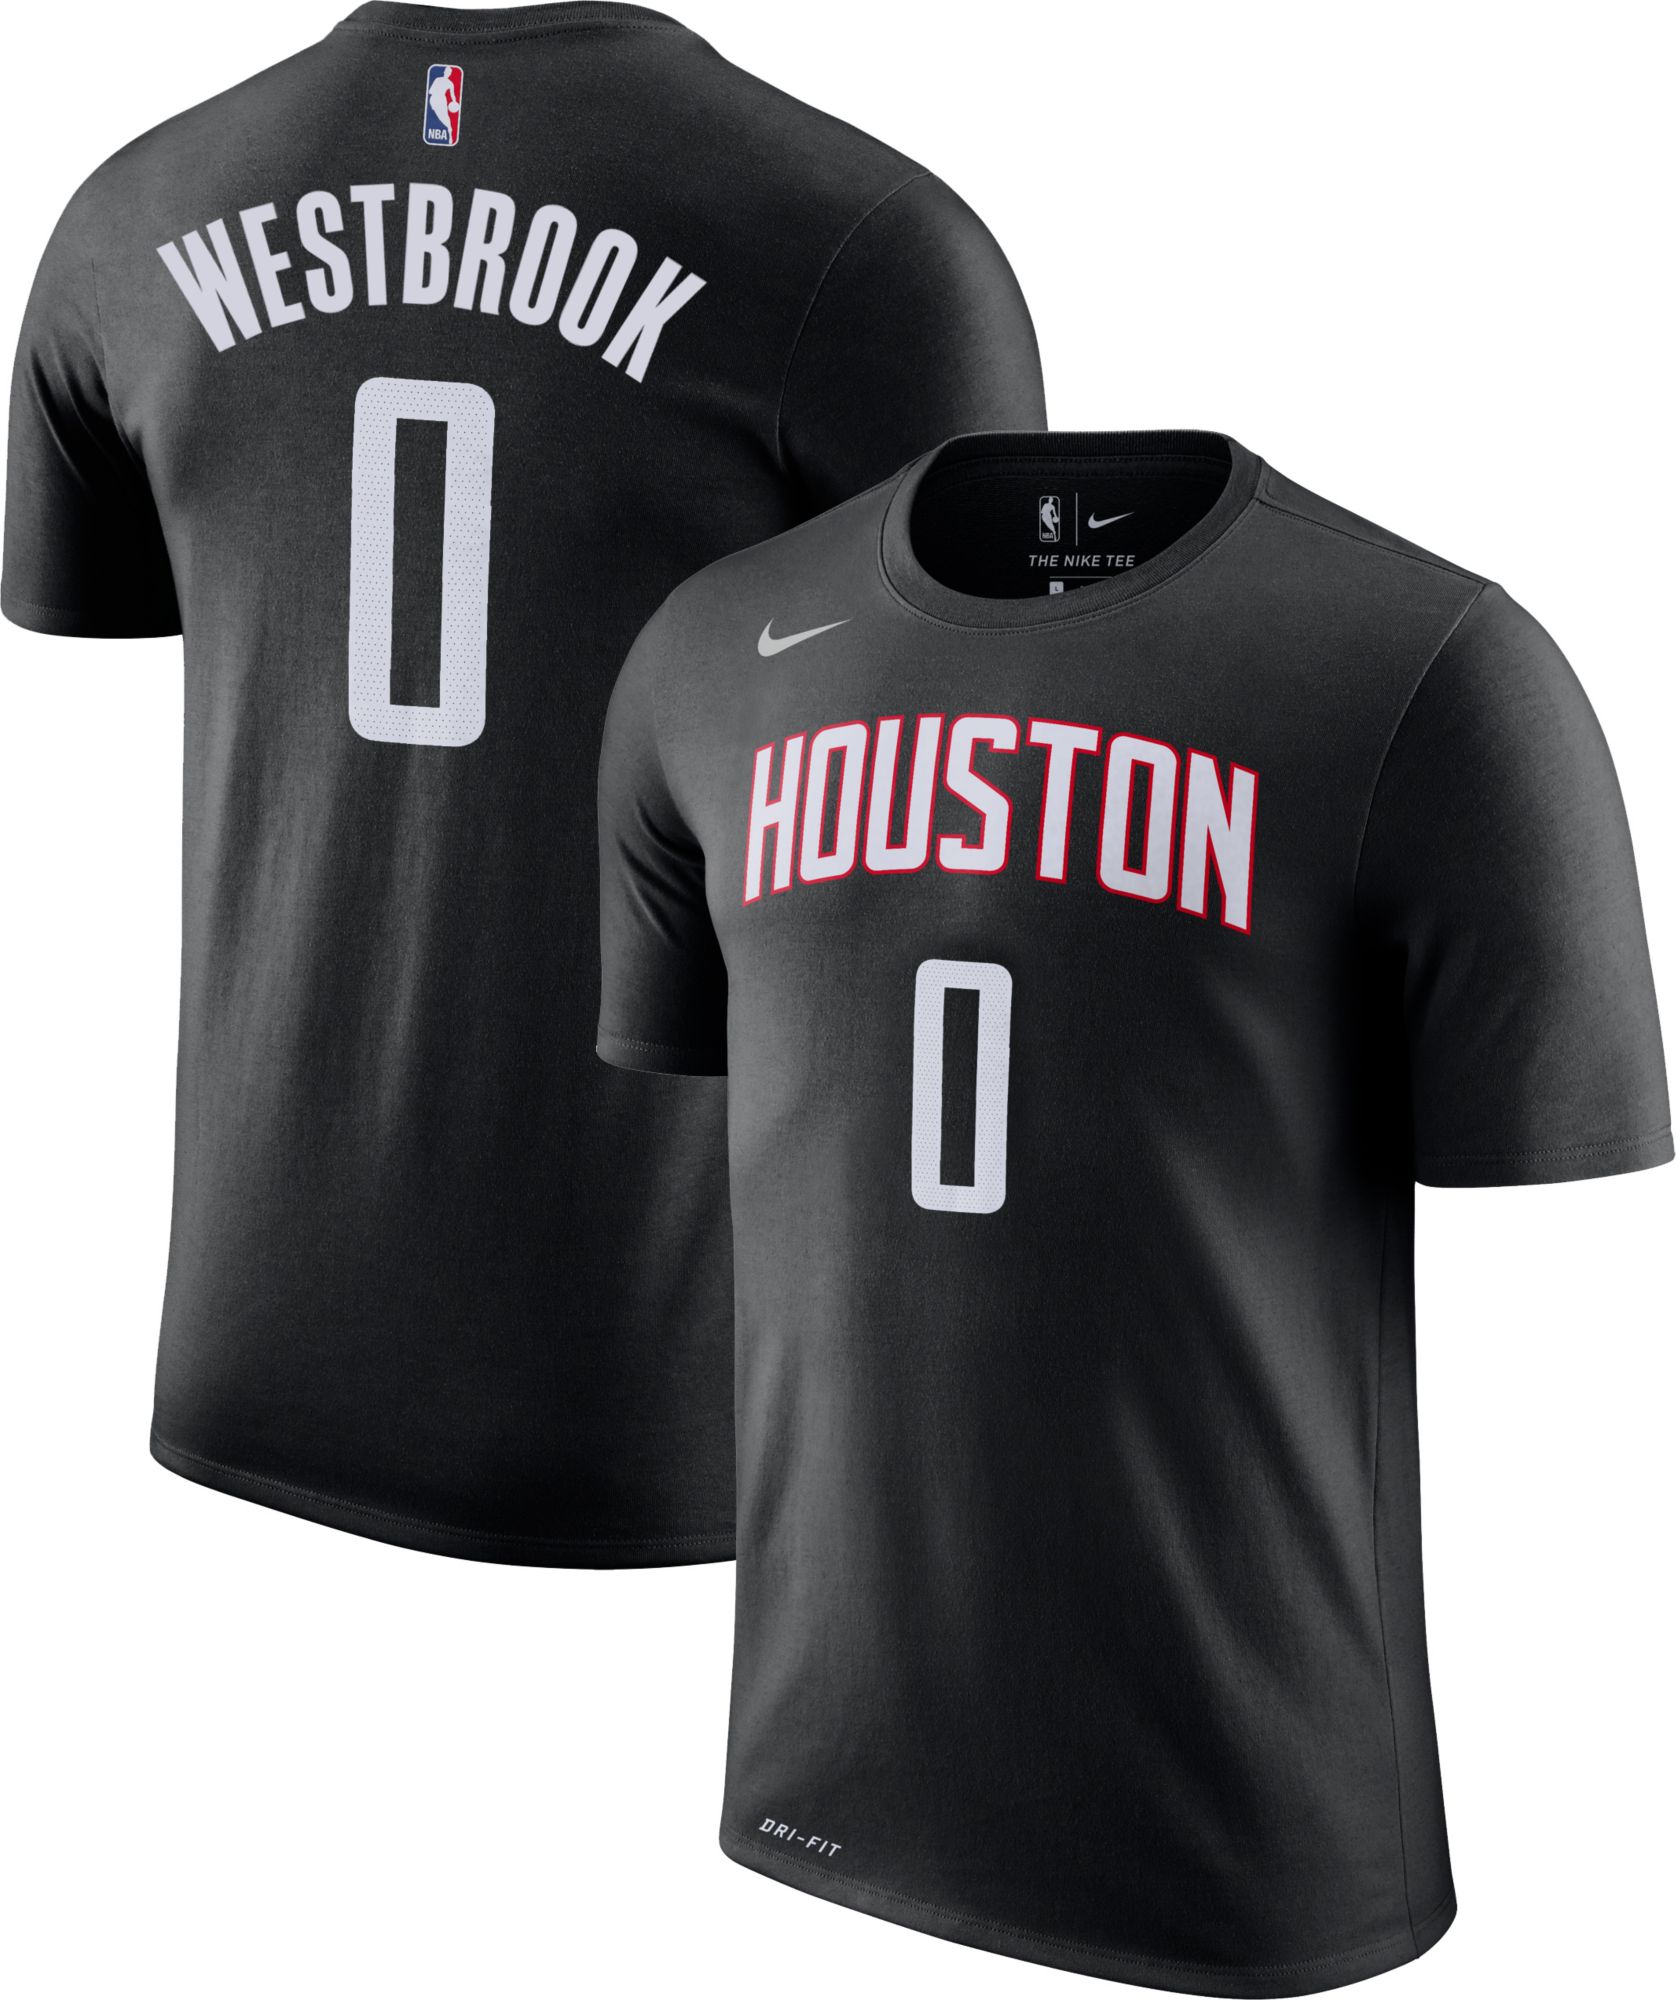 westbrook jersey shirt